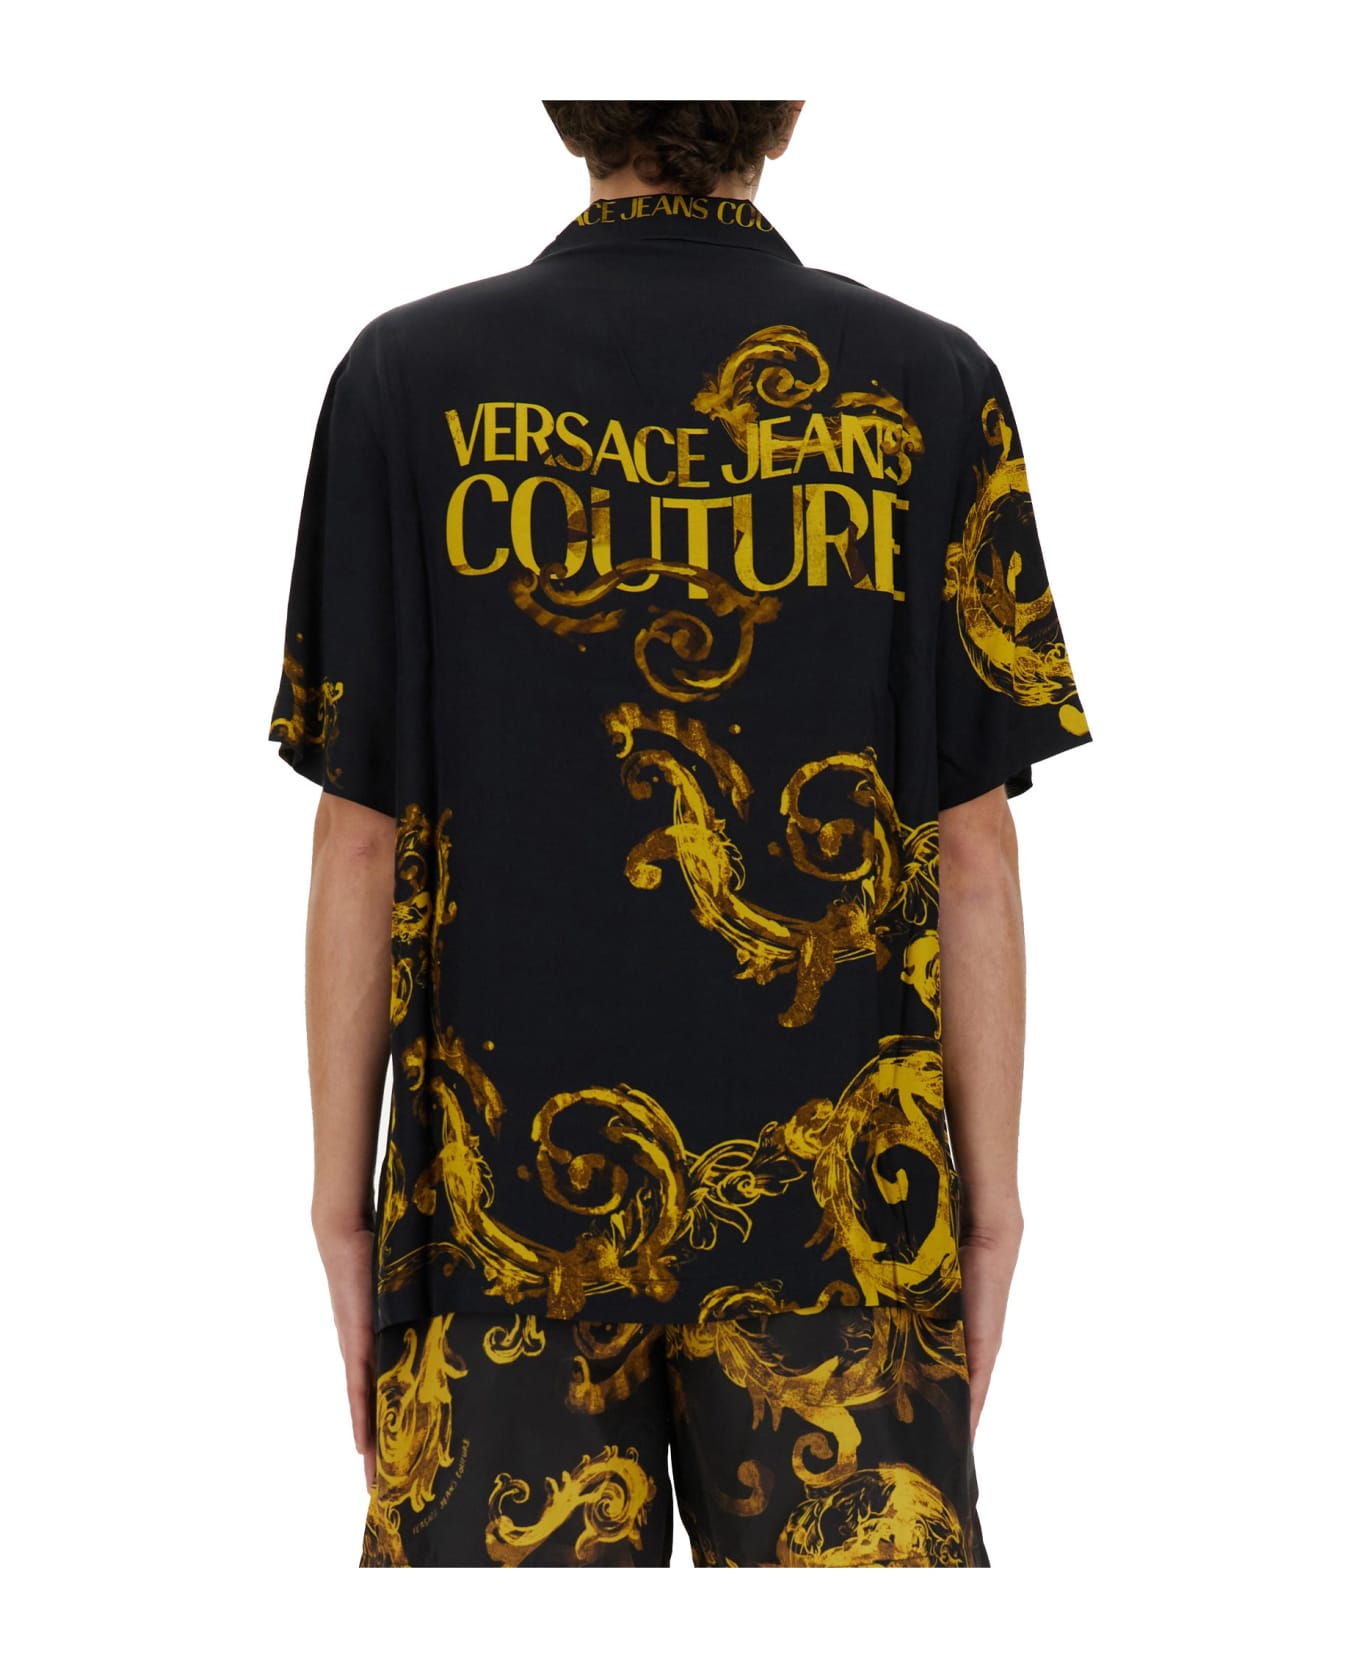 Versace Jeans Couture Watercolour Couture Shirt - BLACK/GOLD